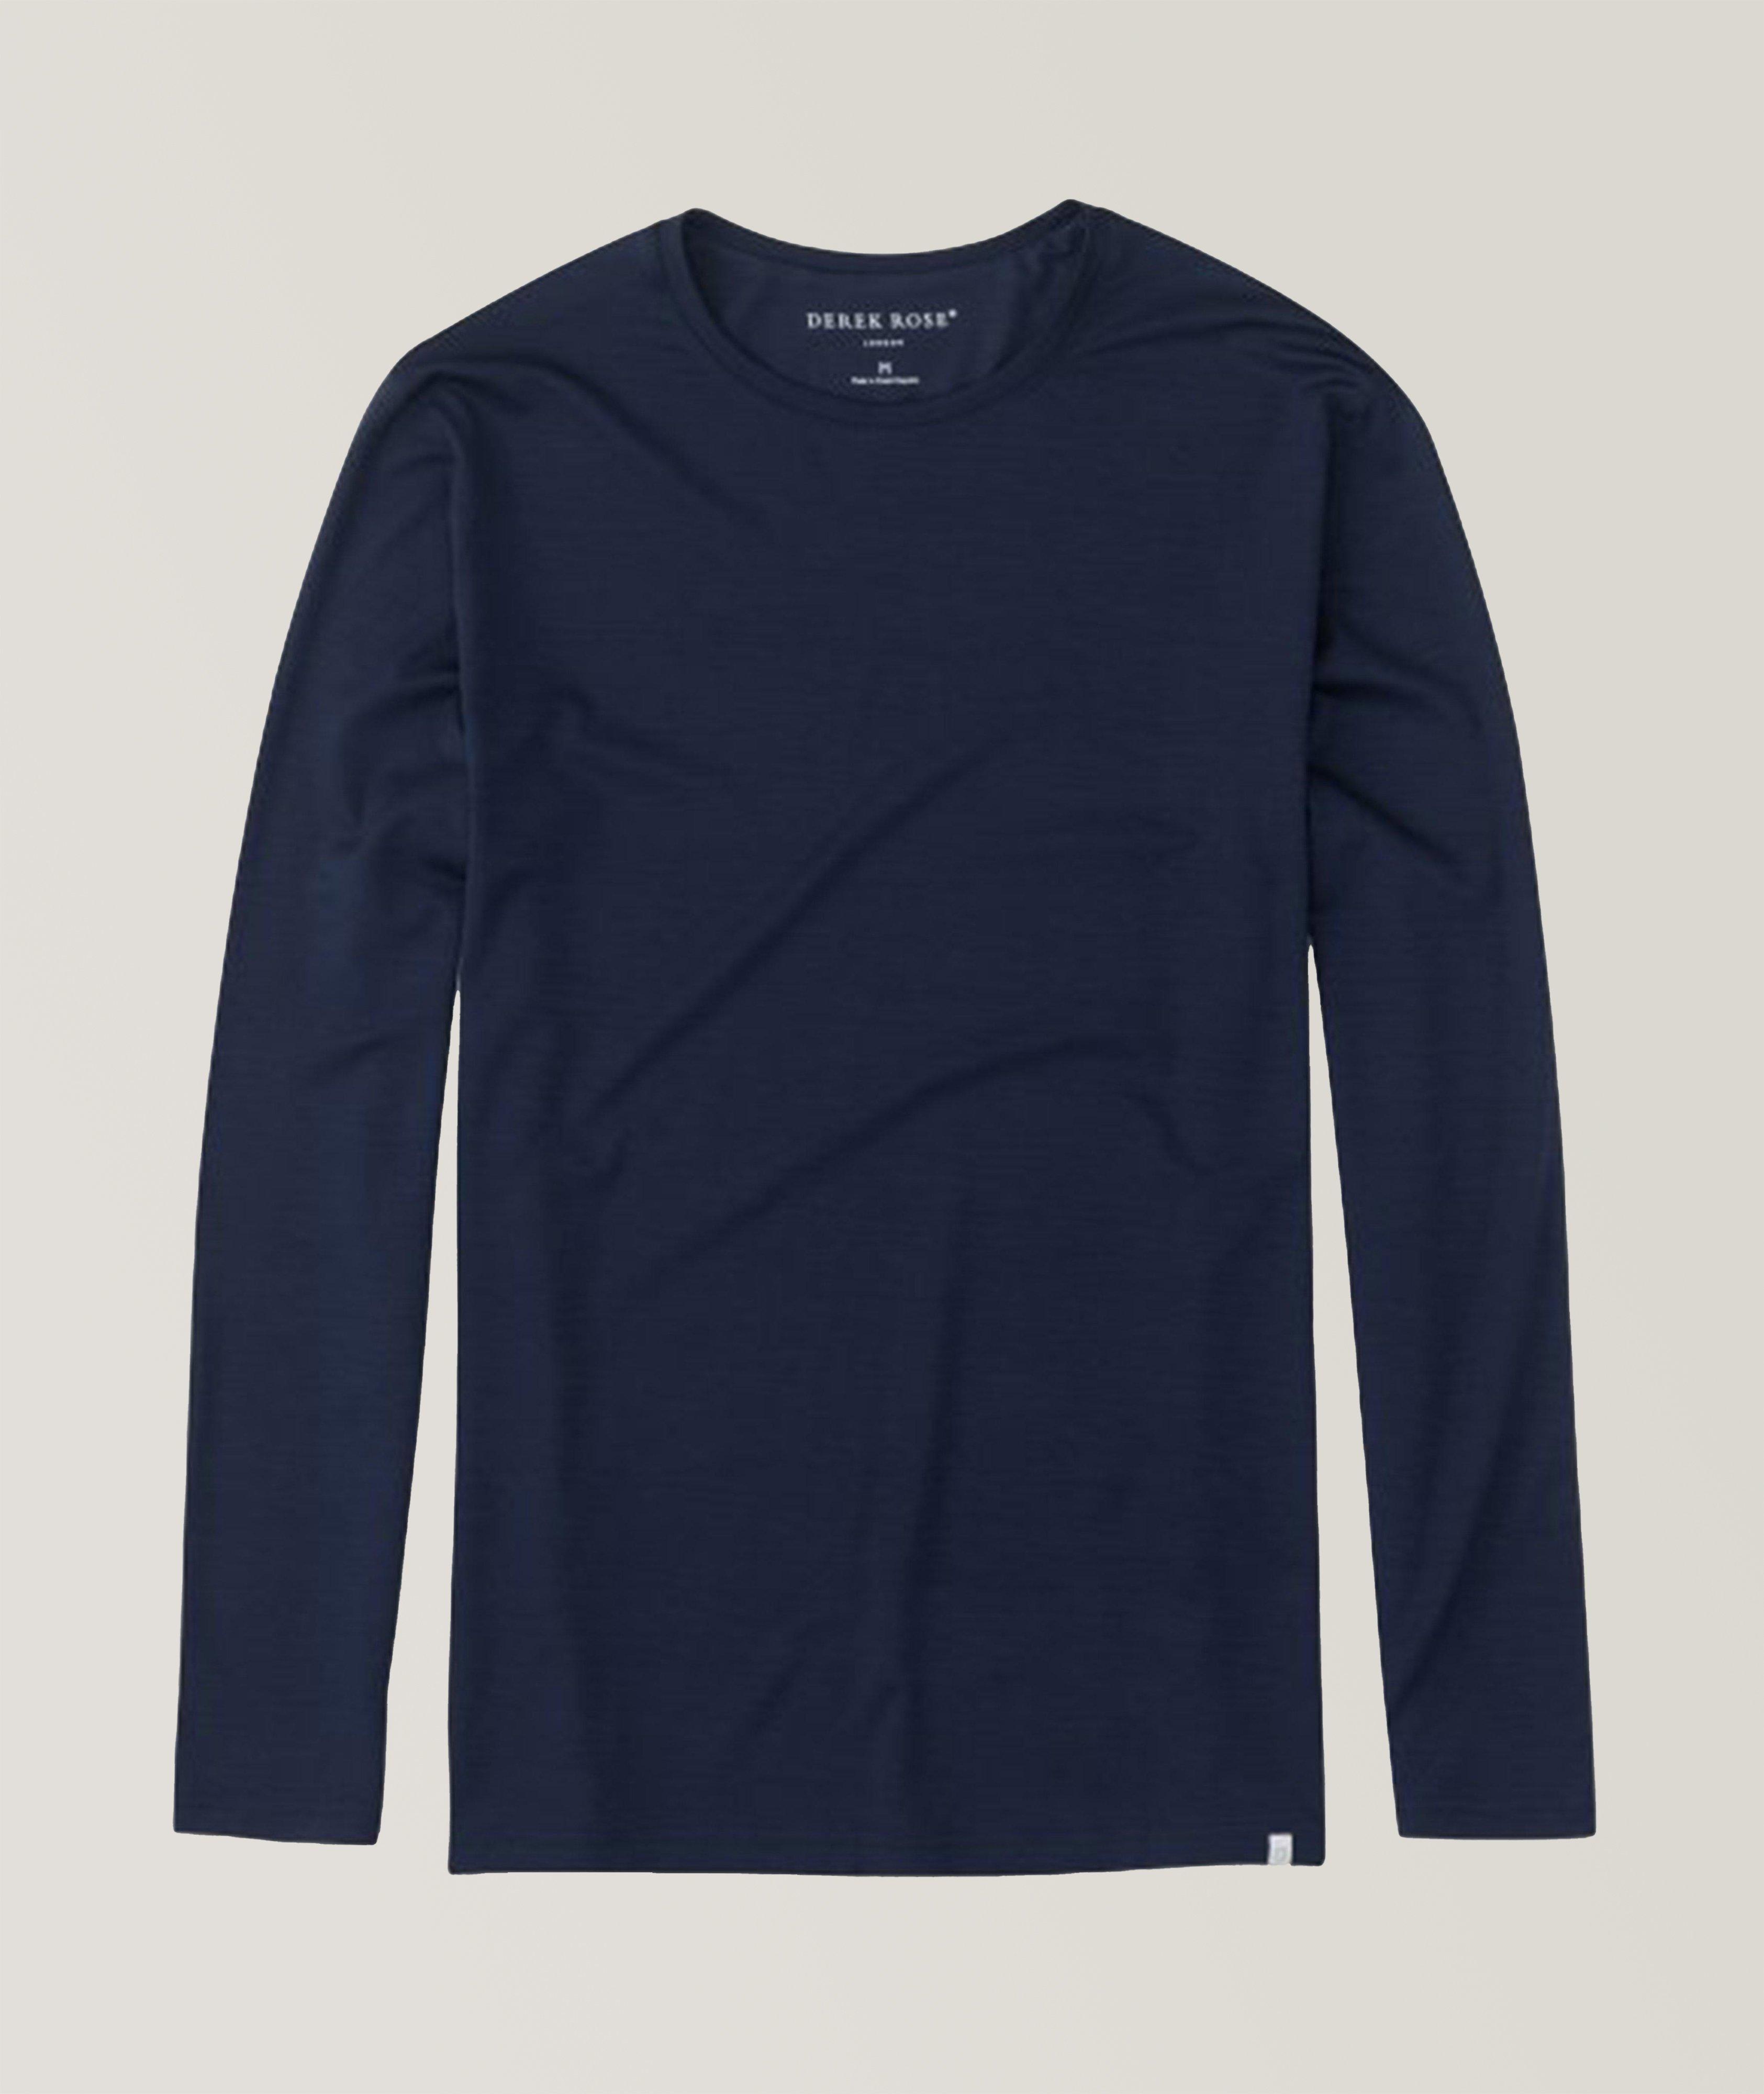 Basel Long-Sleeve Stretch-Micromodal T-Shirt image 0